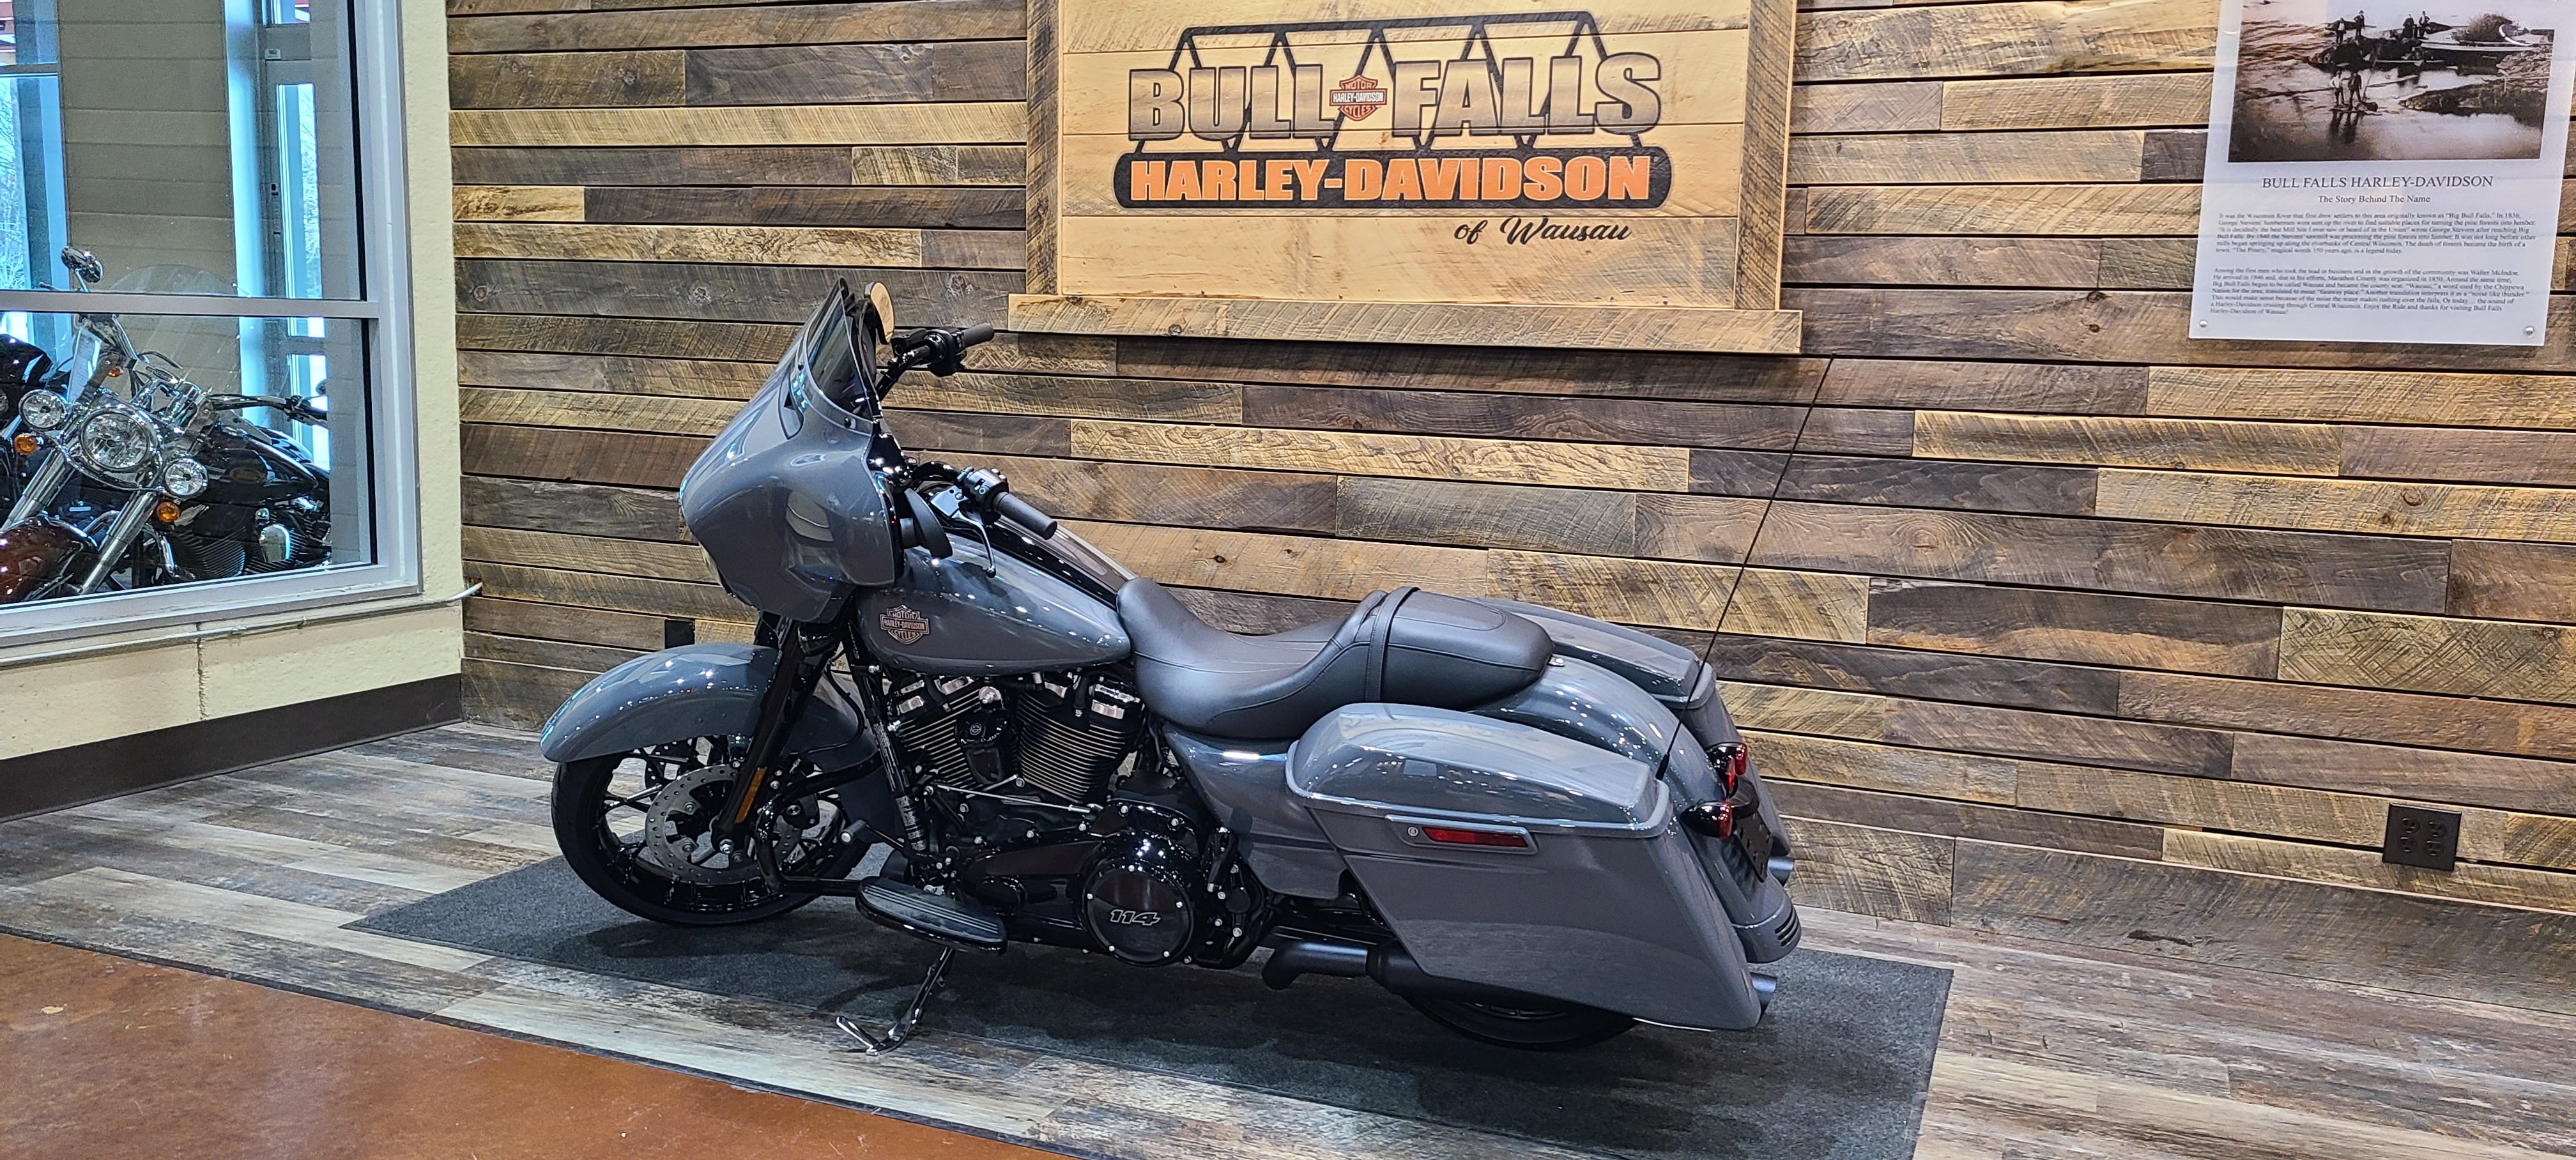 2022 Harley-Davidson Street Glide Special Street Glide Special at Bull Falls Harley-Davidson